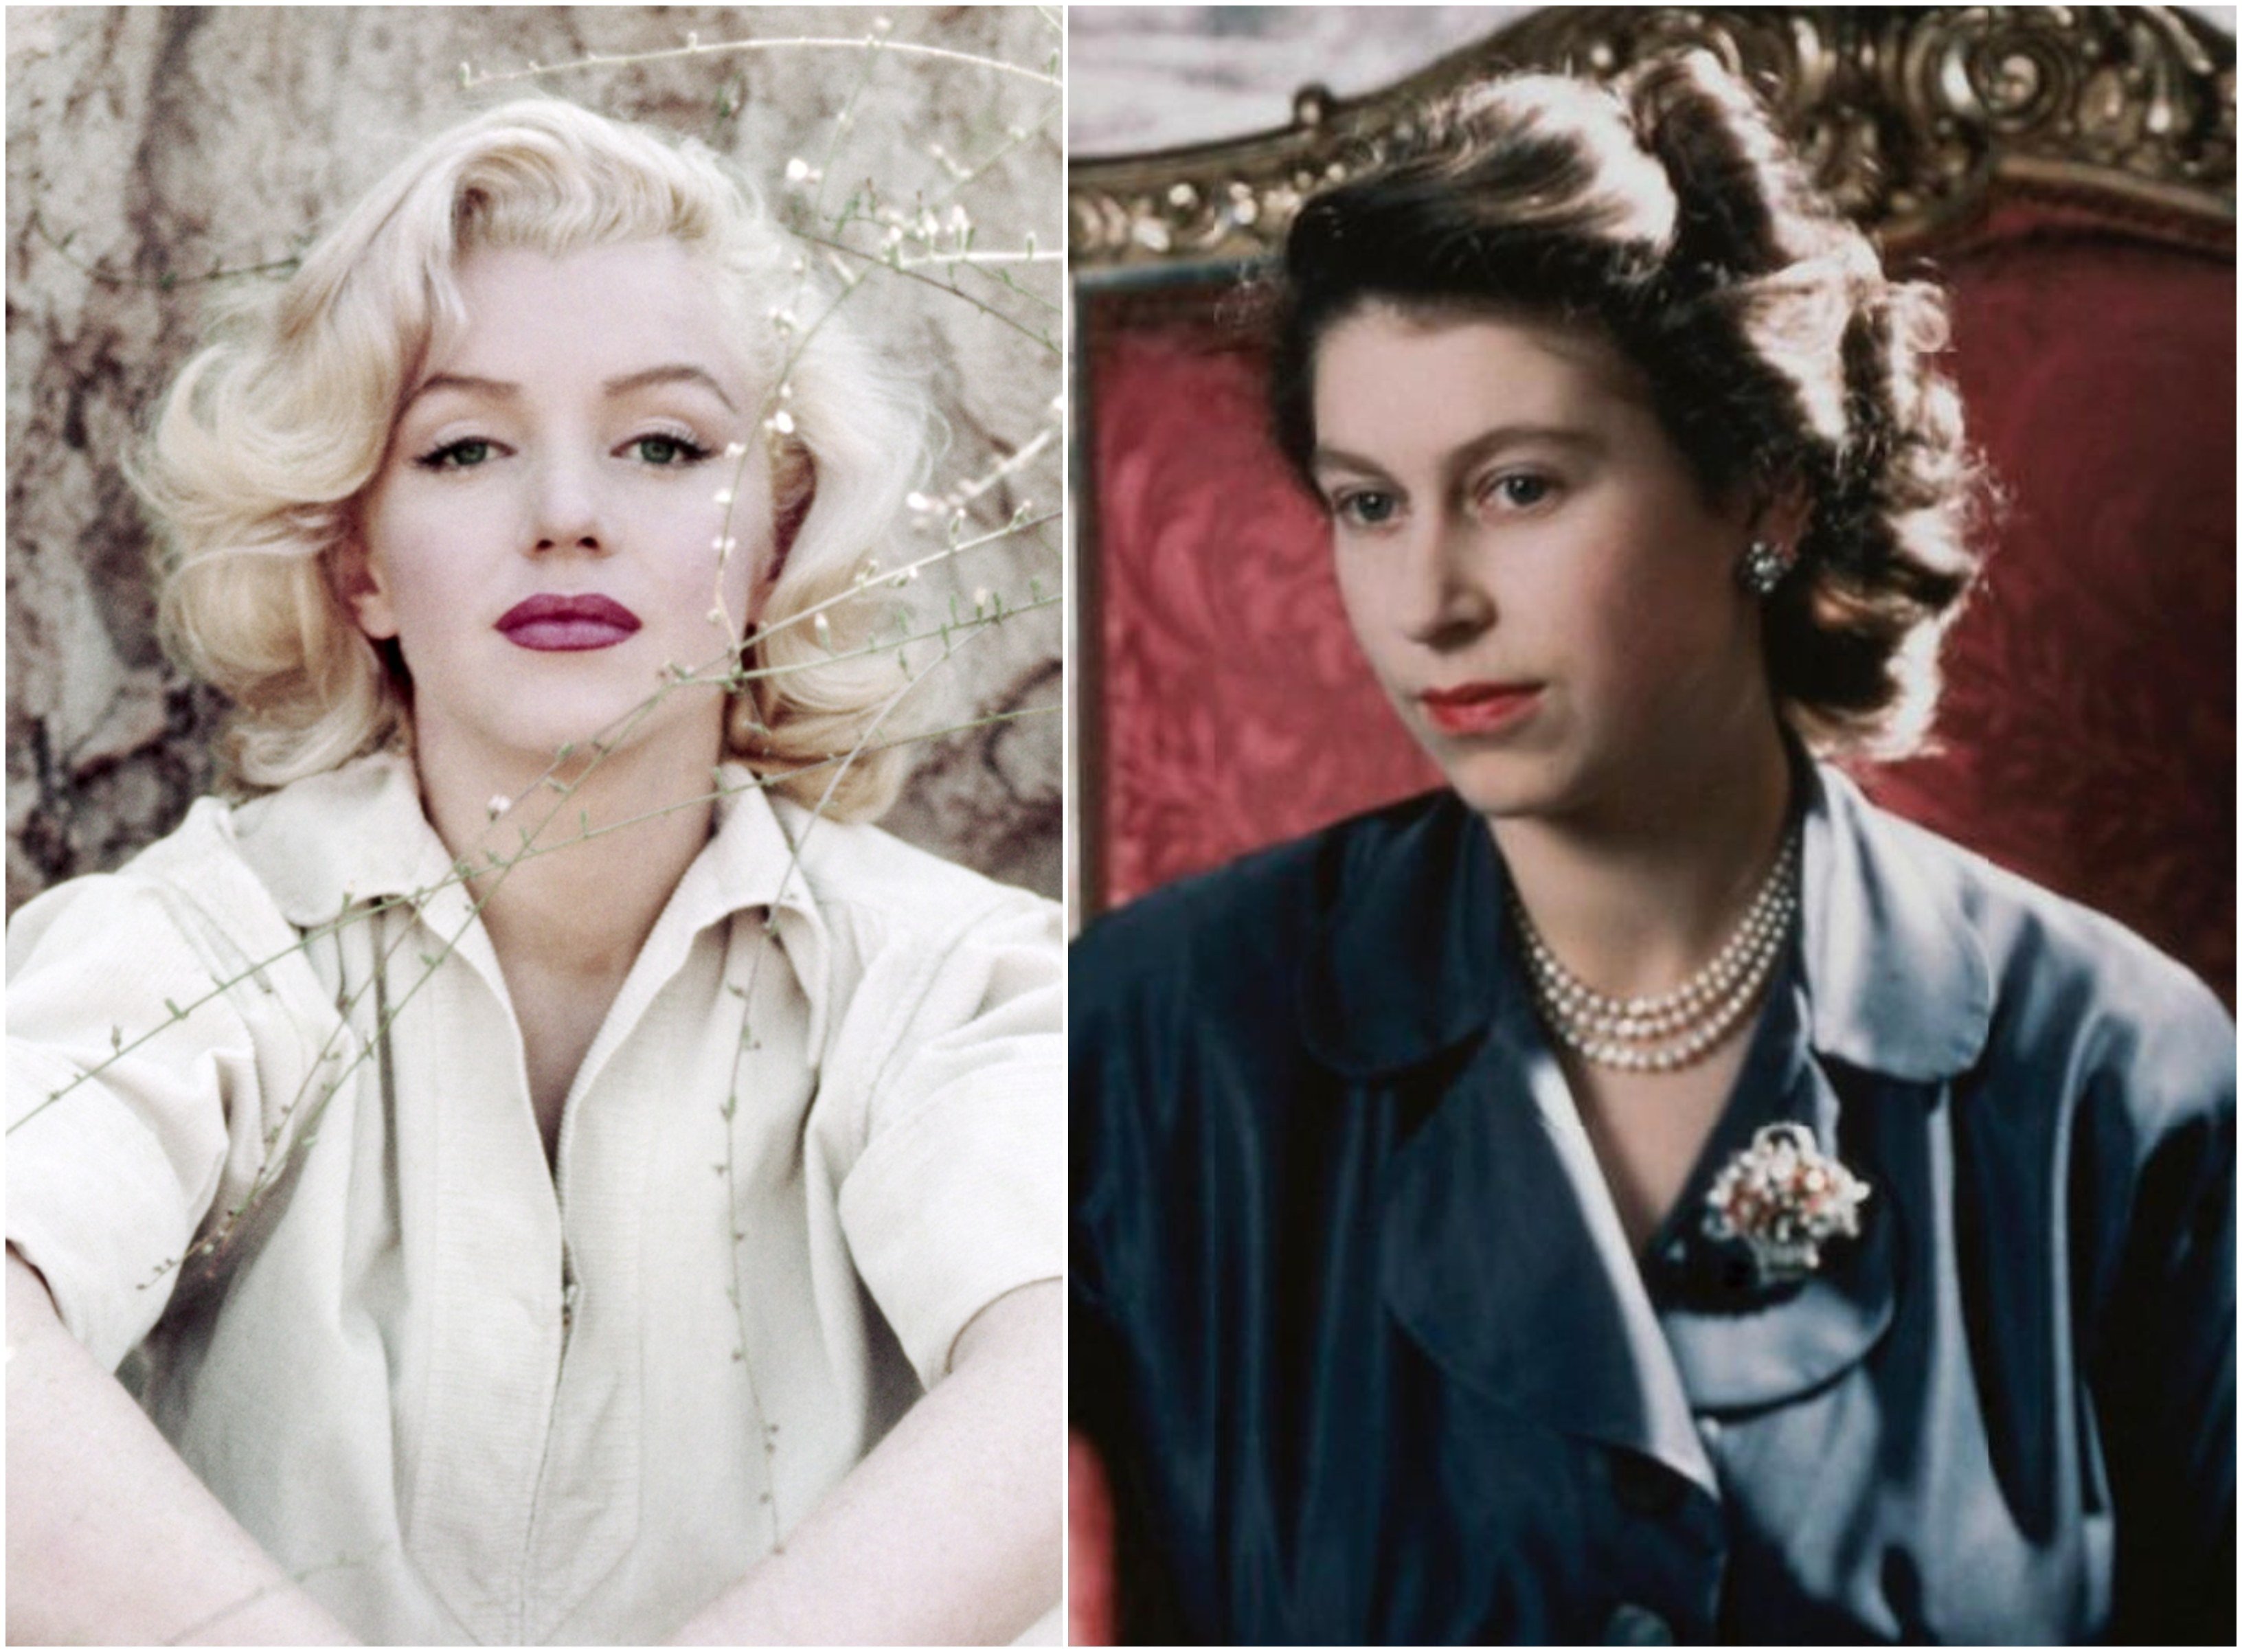 Marilyn Monroe Through the Years